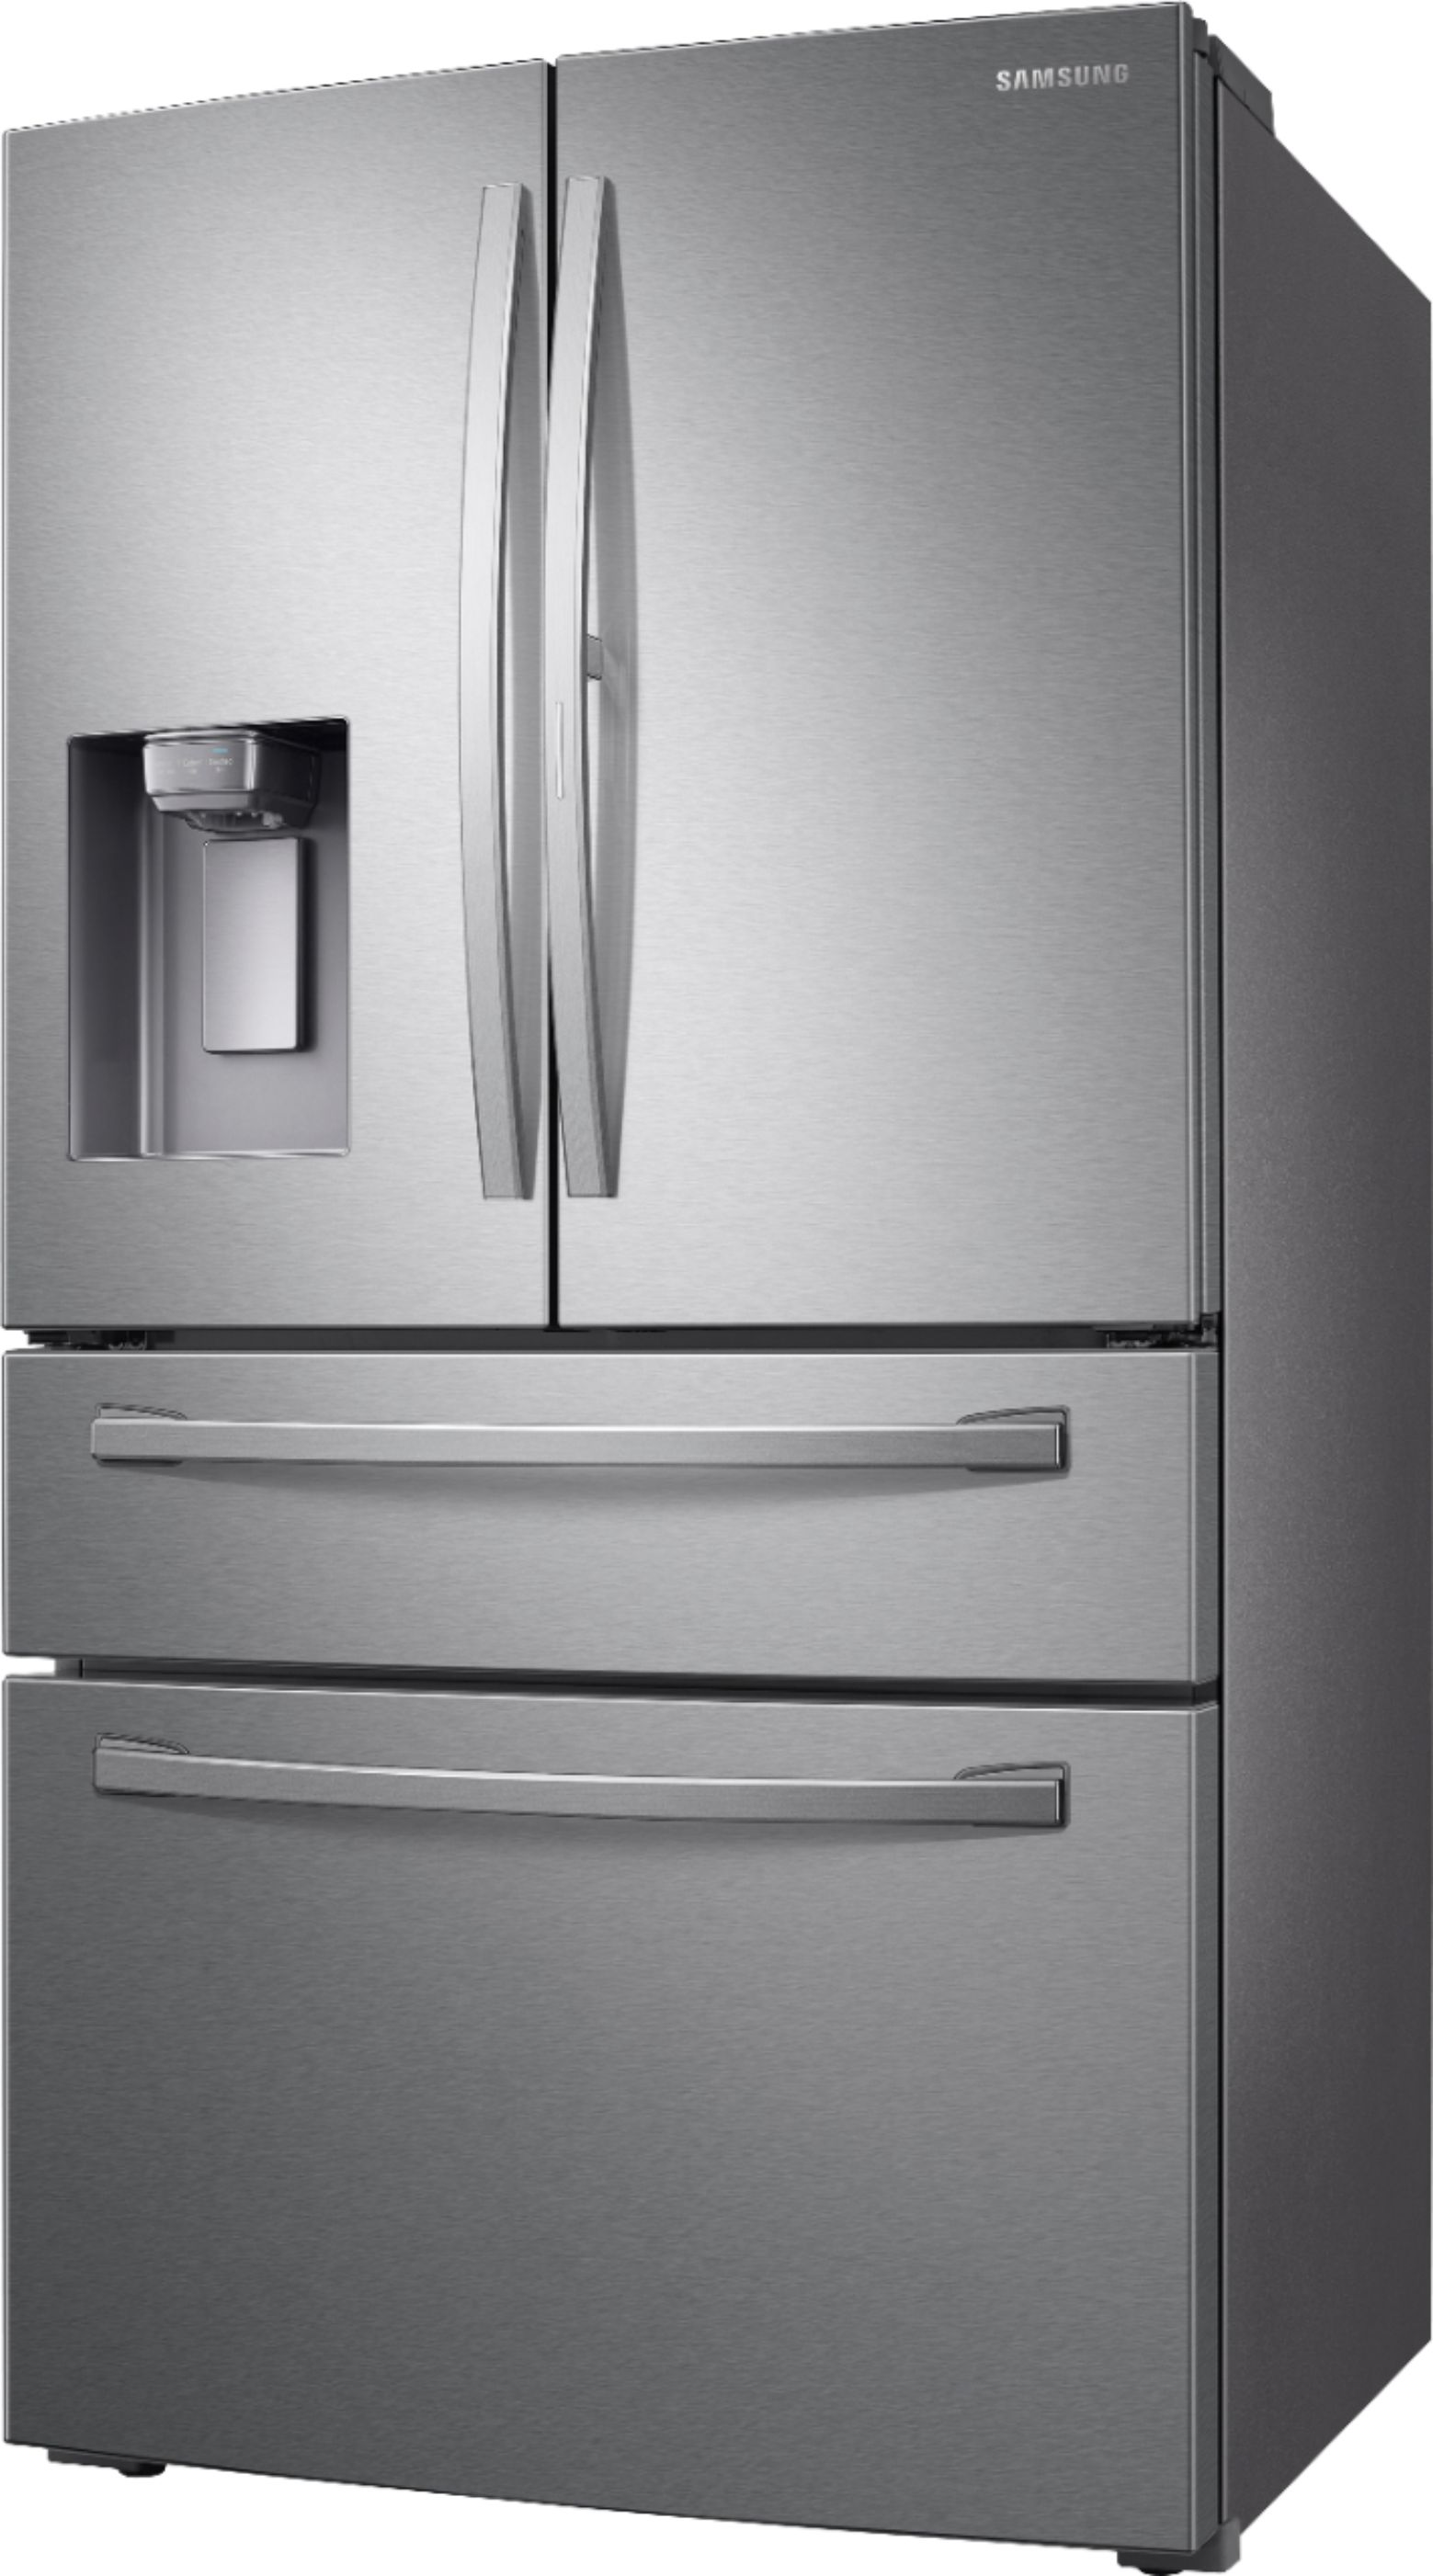 Left View: Samsung - 22.4 cu. ft. 4-Door French Door Counter Depth Refrigerator with Food Showcase - Stainless steel